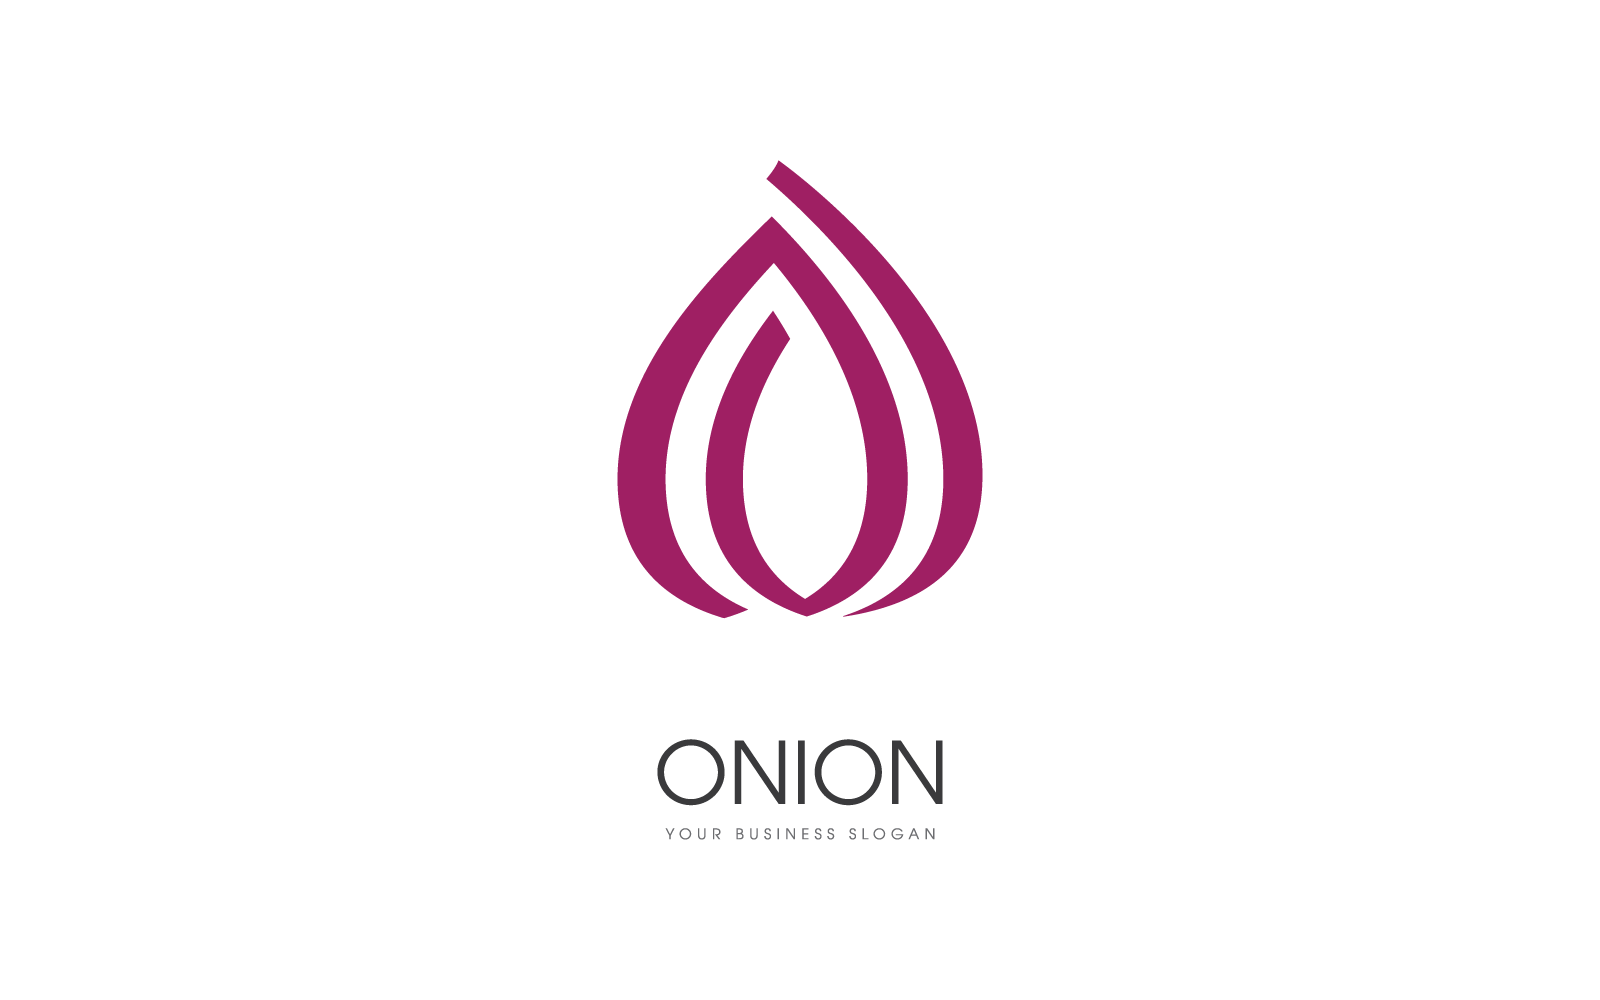 Onion on white background vector illustration design Logo Template